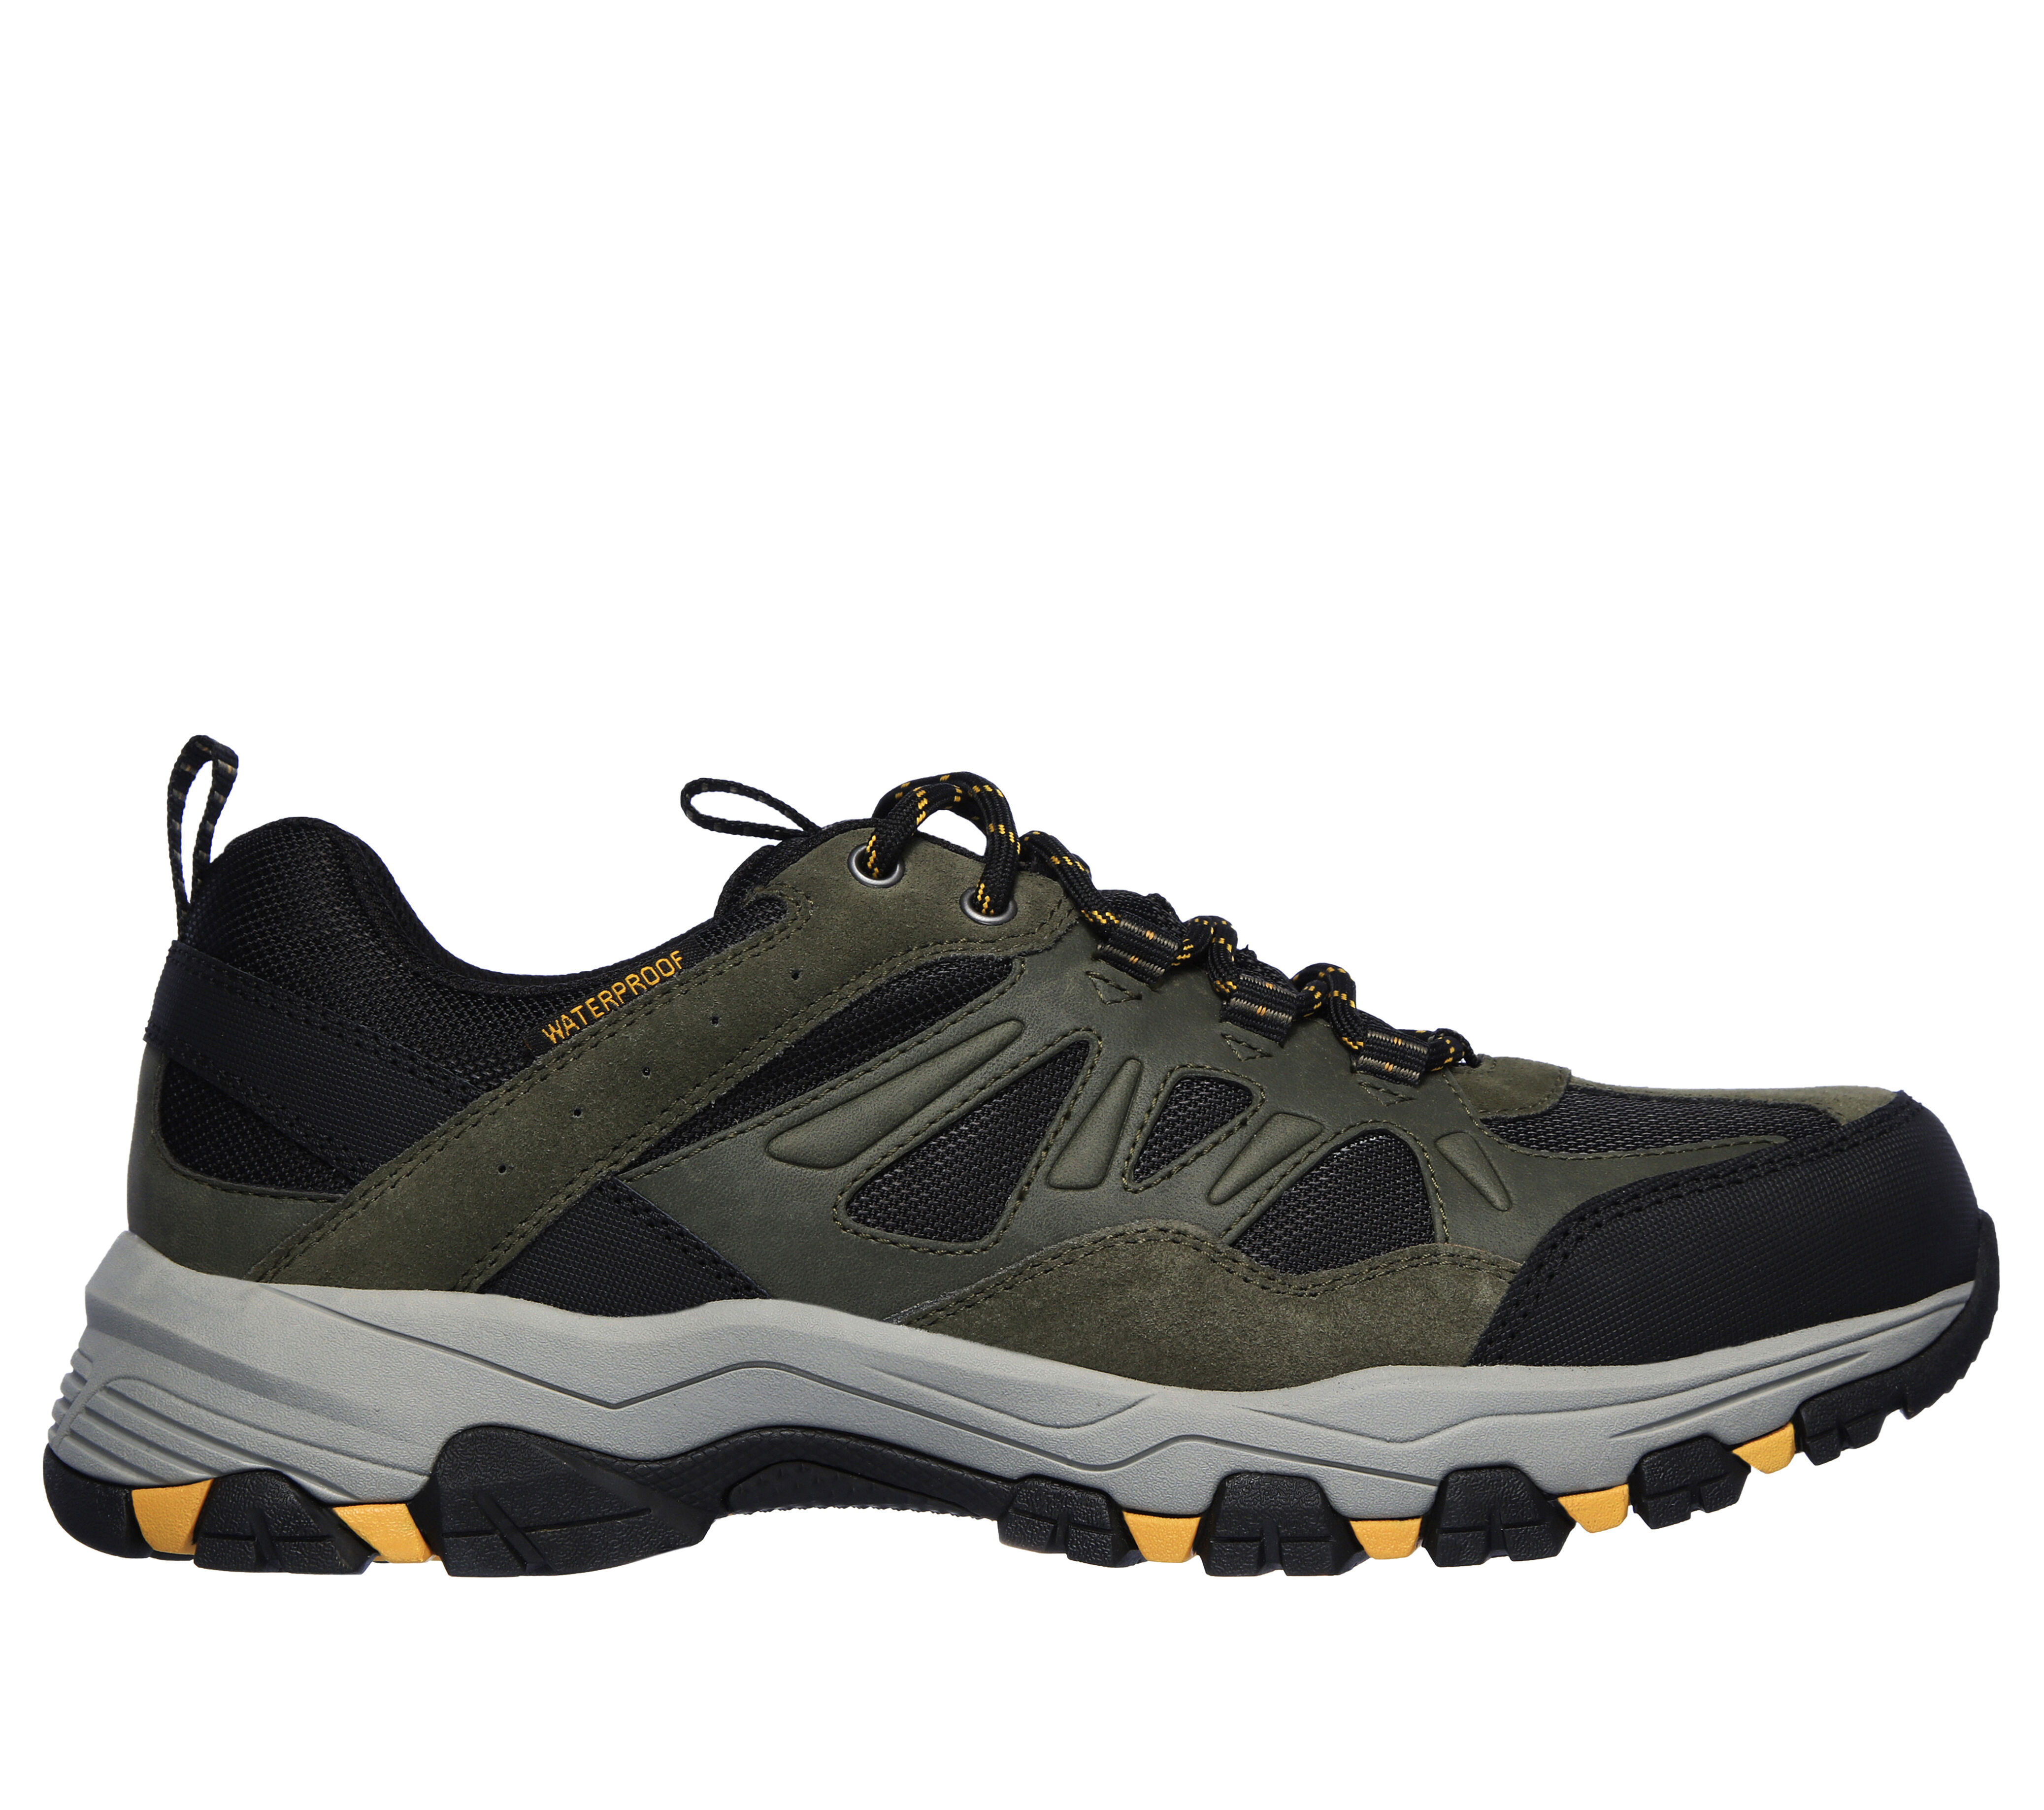 skechers men's hiking shoes